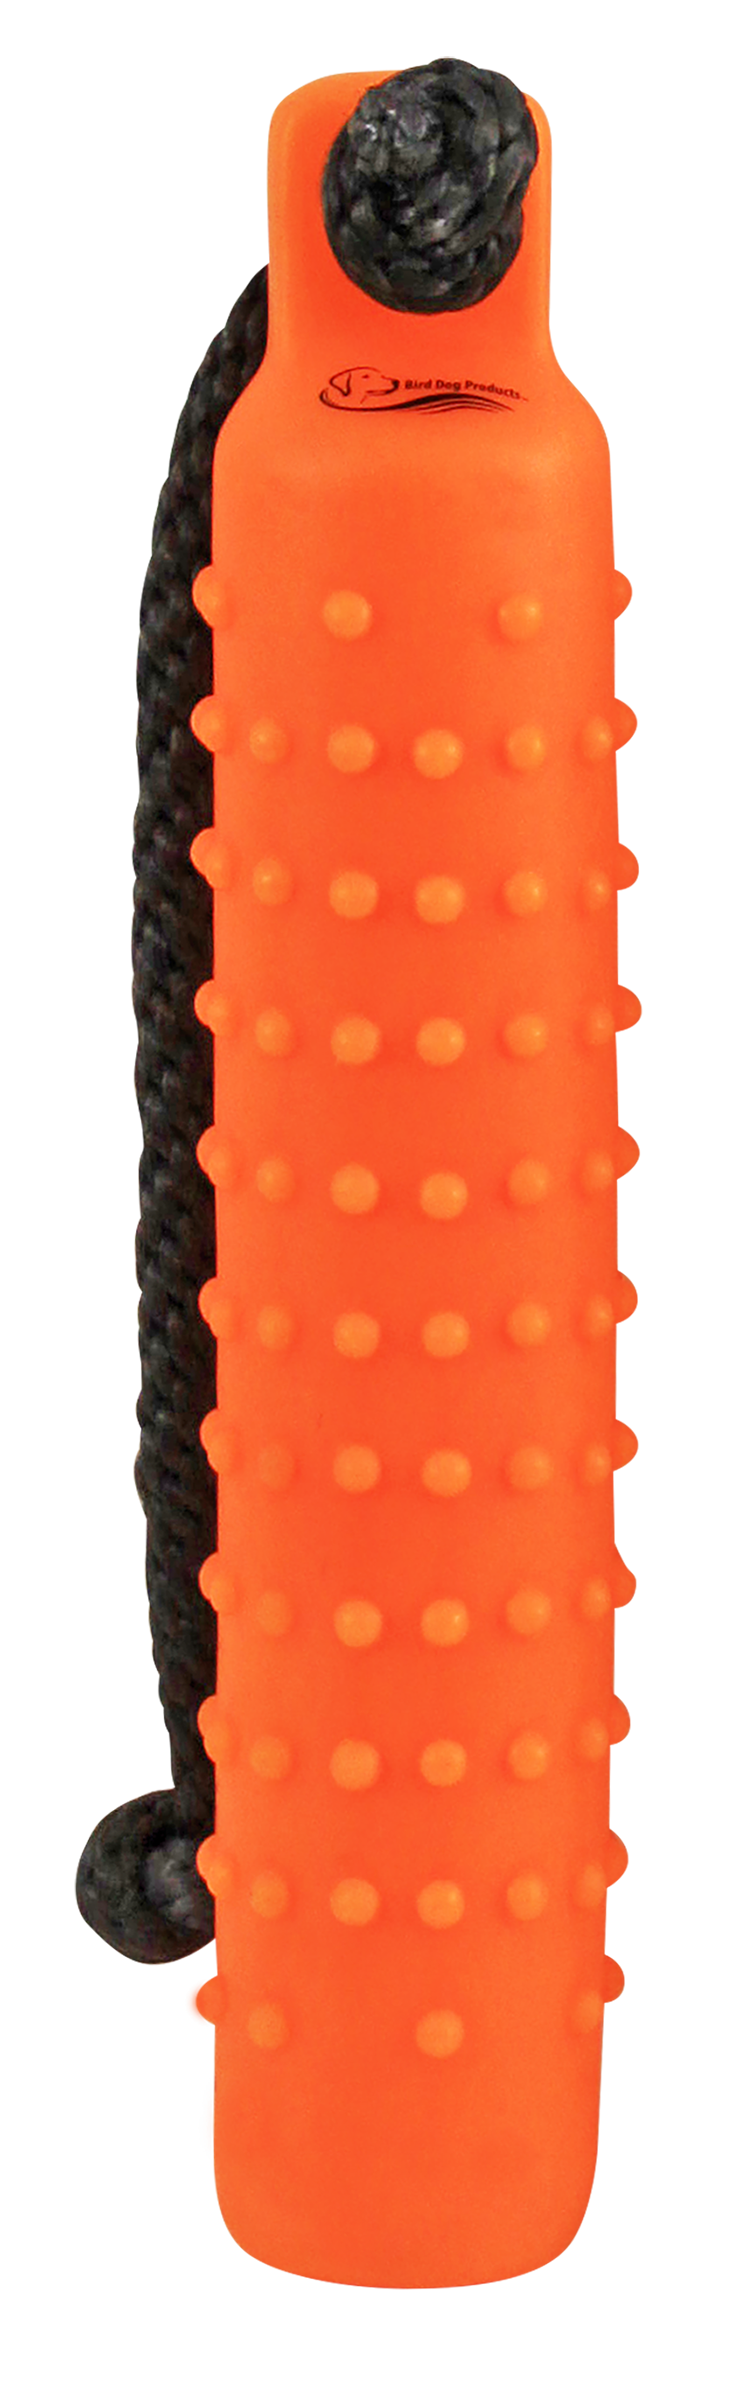 Irregular Standard Plastic Training Bumper / Dummy (Orange)